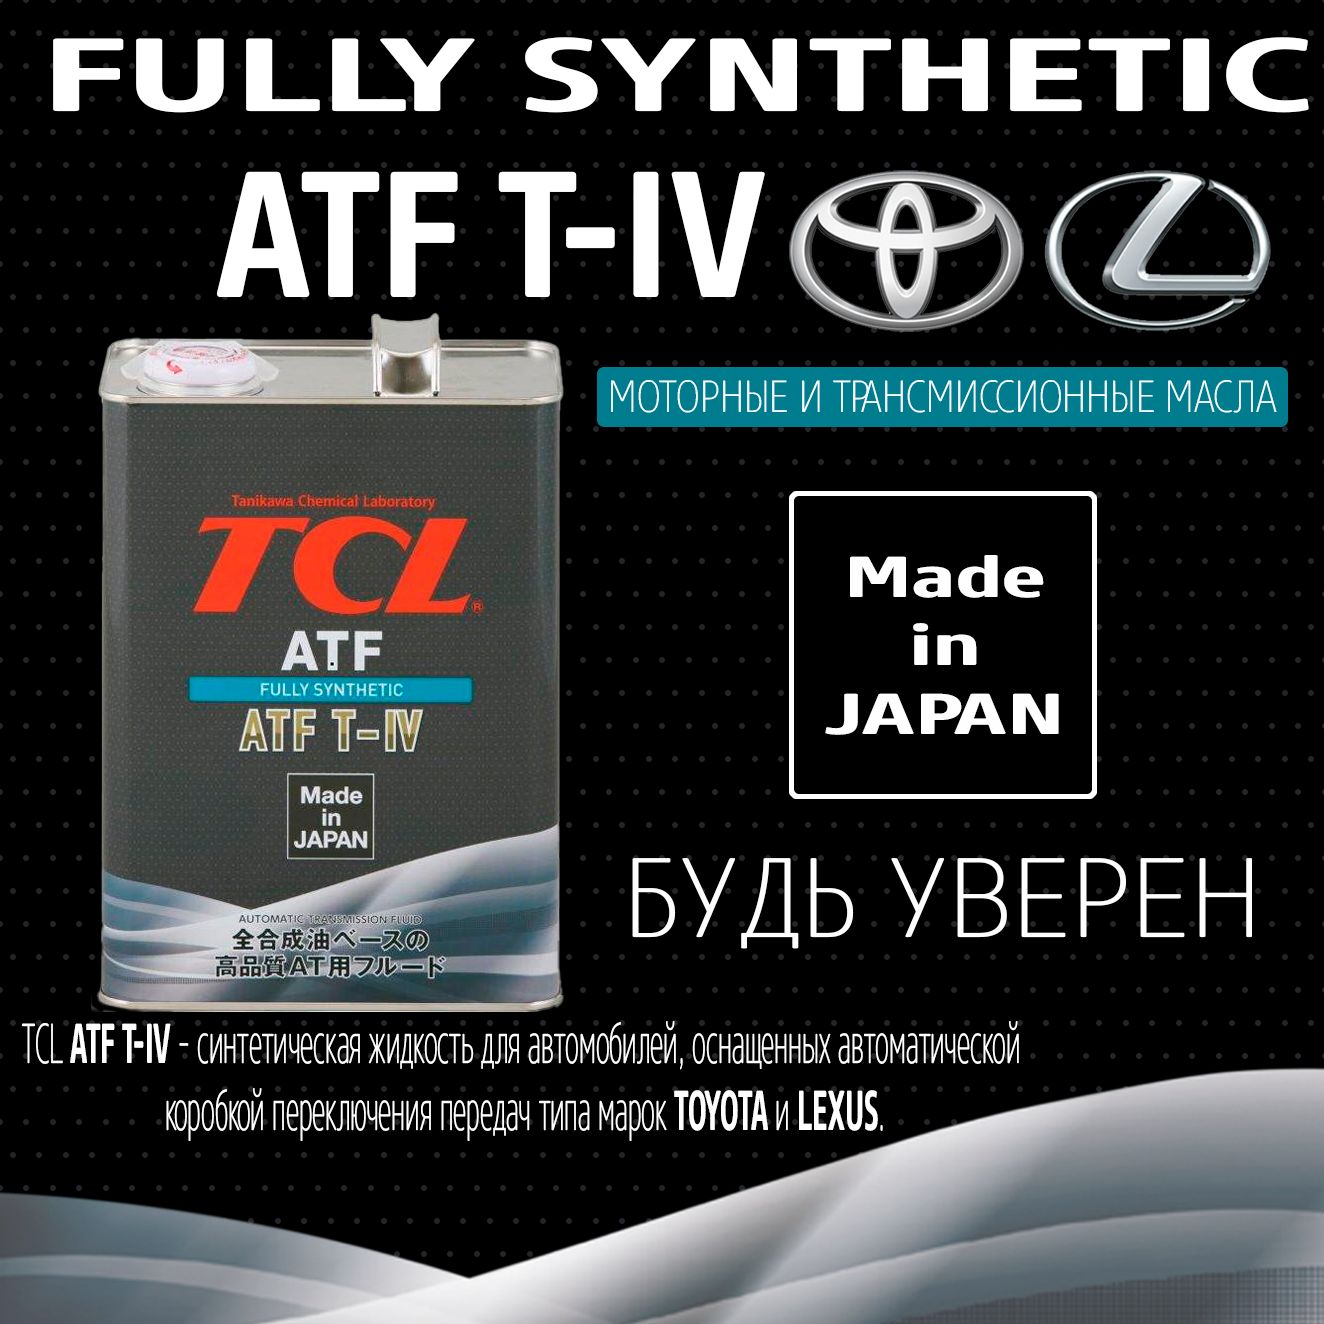 Tcl atf. Жидкость для АКПП TCL ATF WS, 4л. Тойота АТФ тайп т 4. 0888680200 Жидкость для АКПП ATF WS 4л. Масло вариаторное Type t_IV.